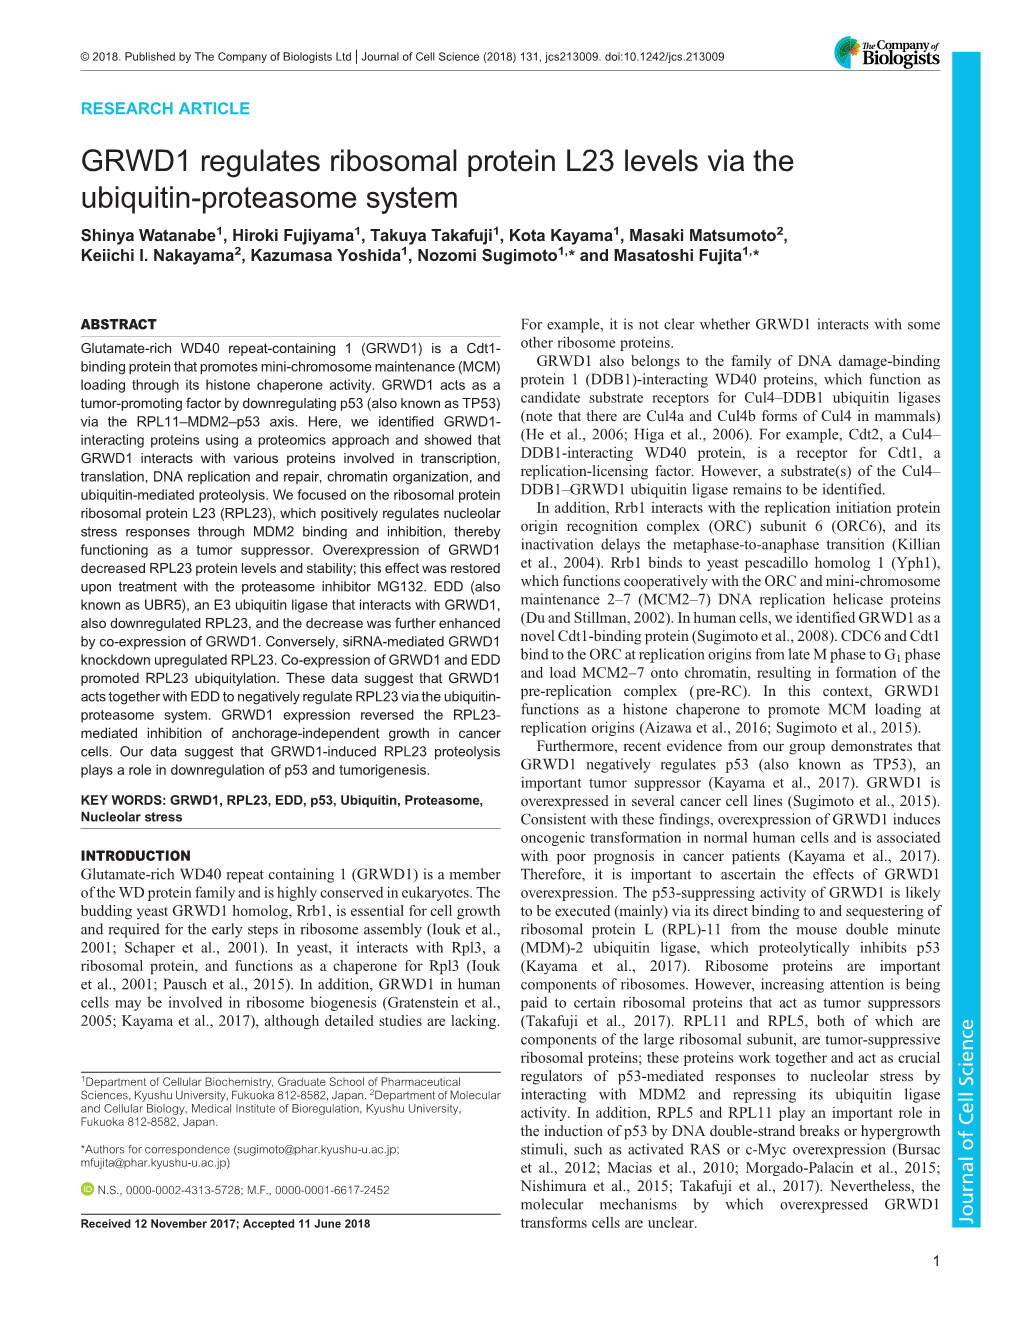 GRWD1 Regulates Ribosomal Protein L23 Levels Via the Ubiquitin